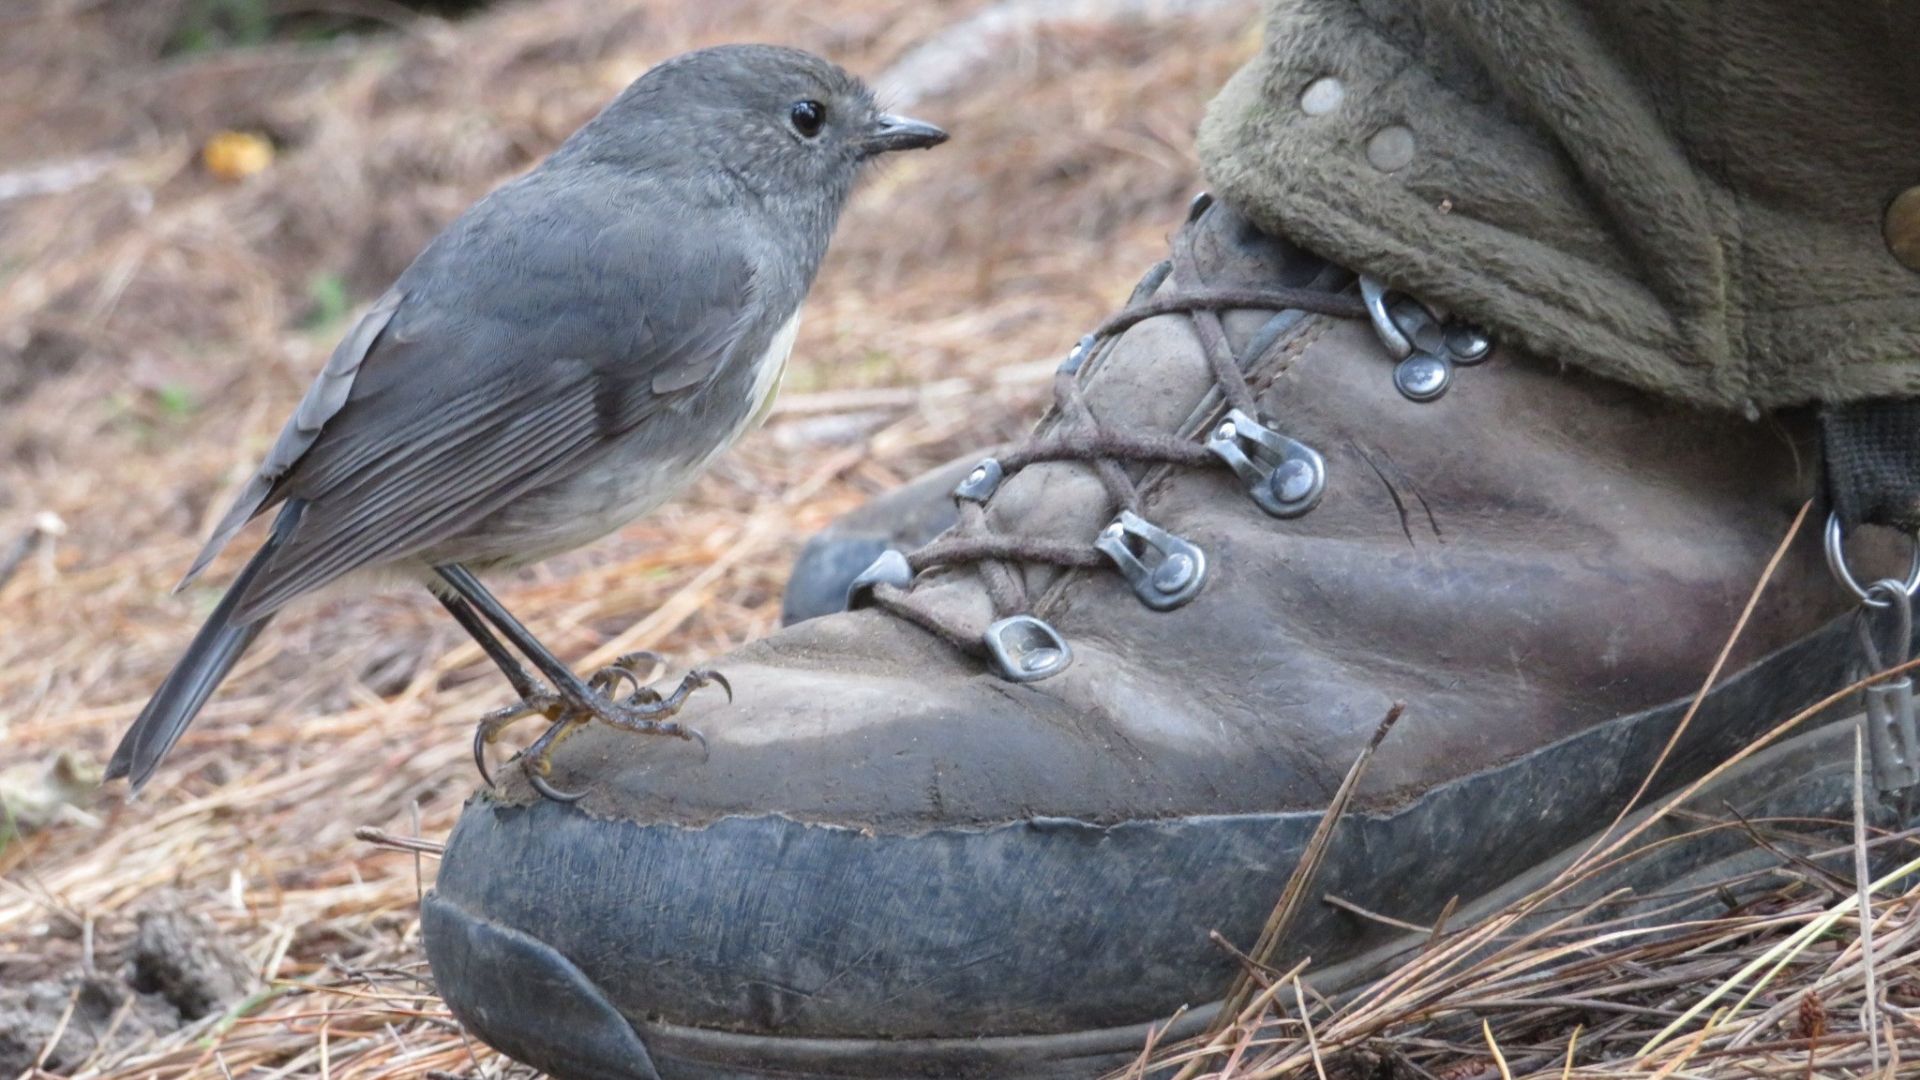 Kakaruwai (South Island robin) perched on a boot.